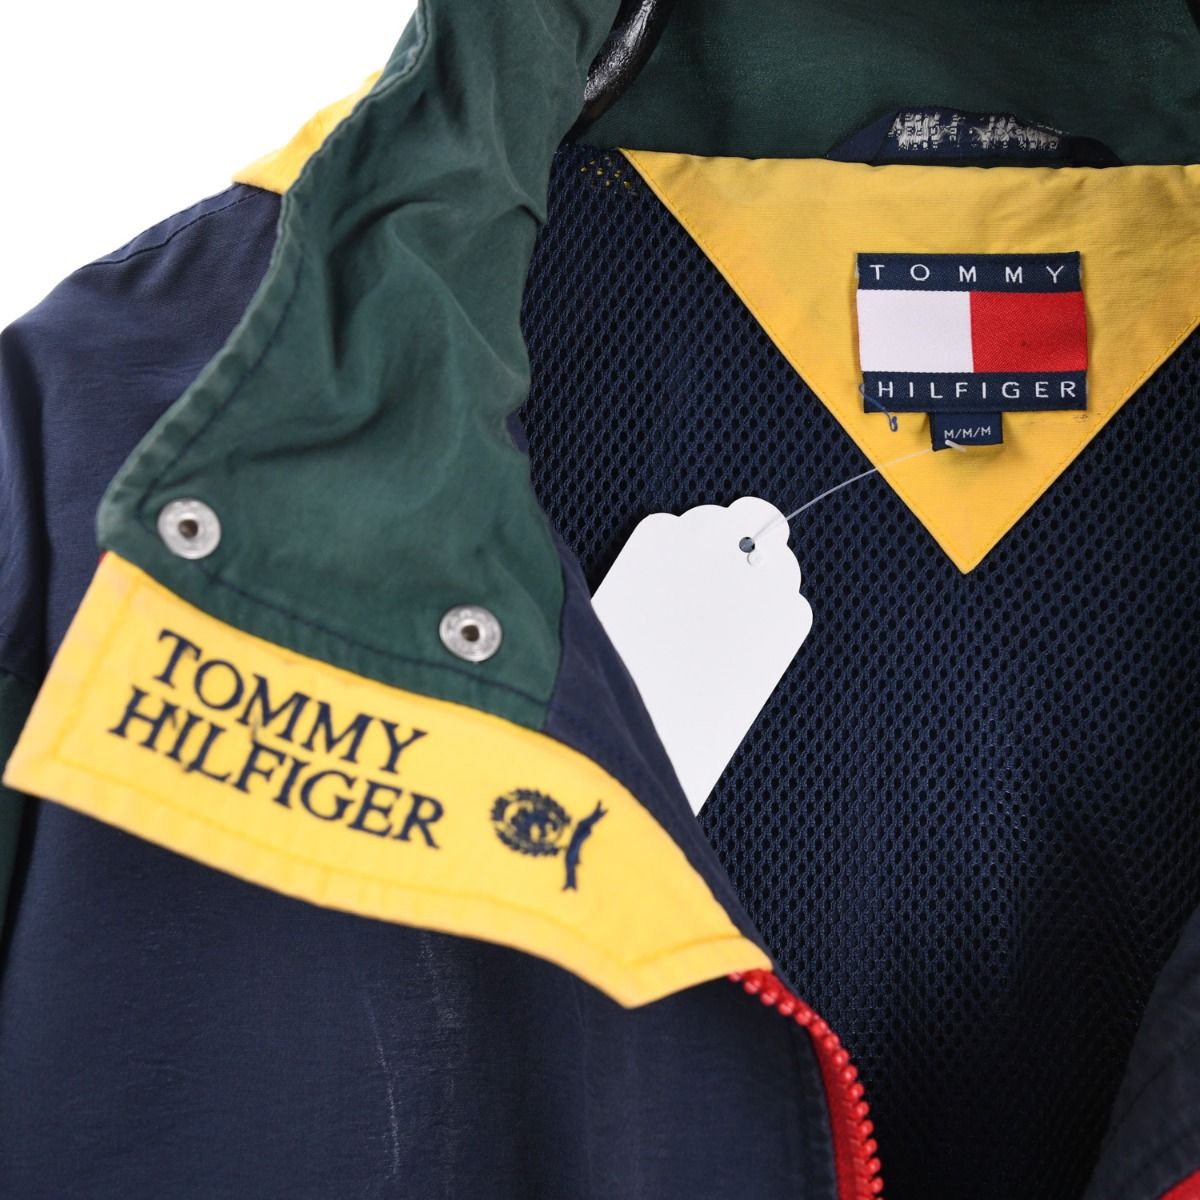 Tommy Hilfiger Sailing Gear 1990s Jacket